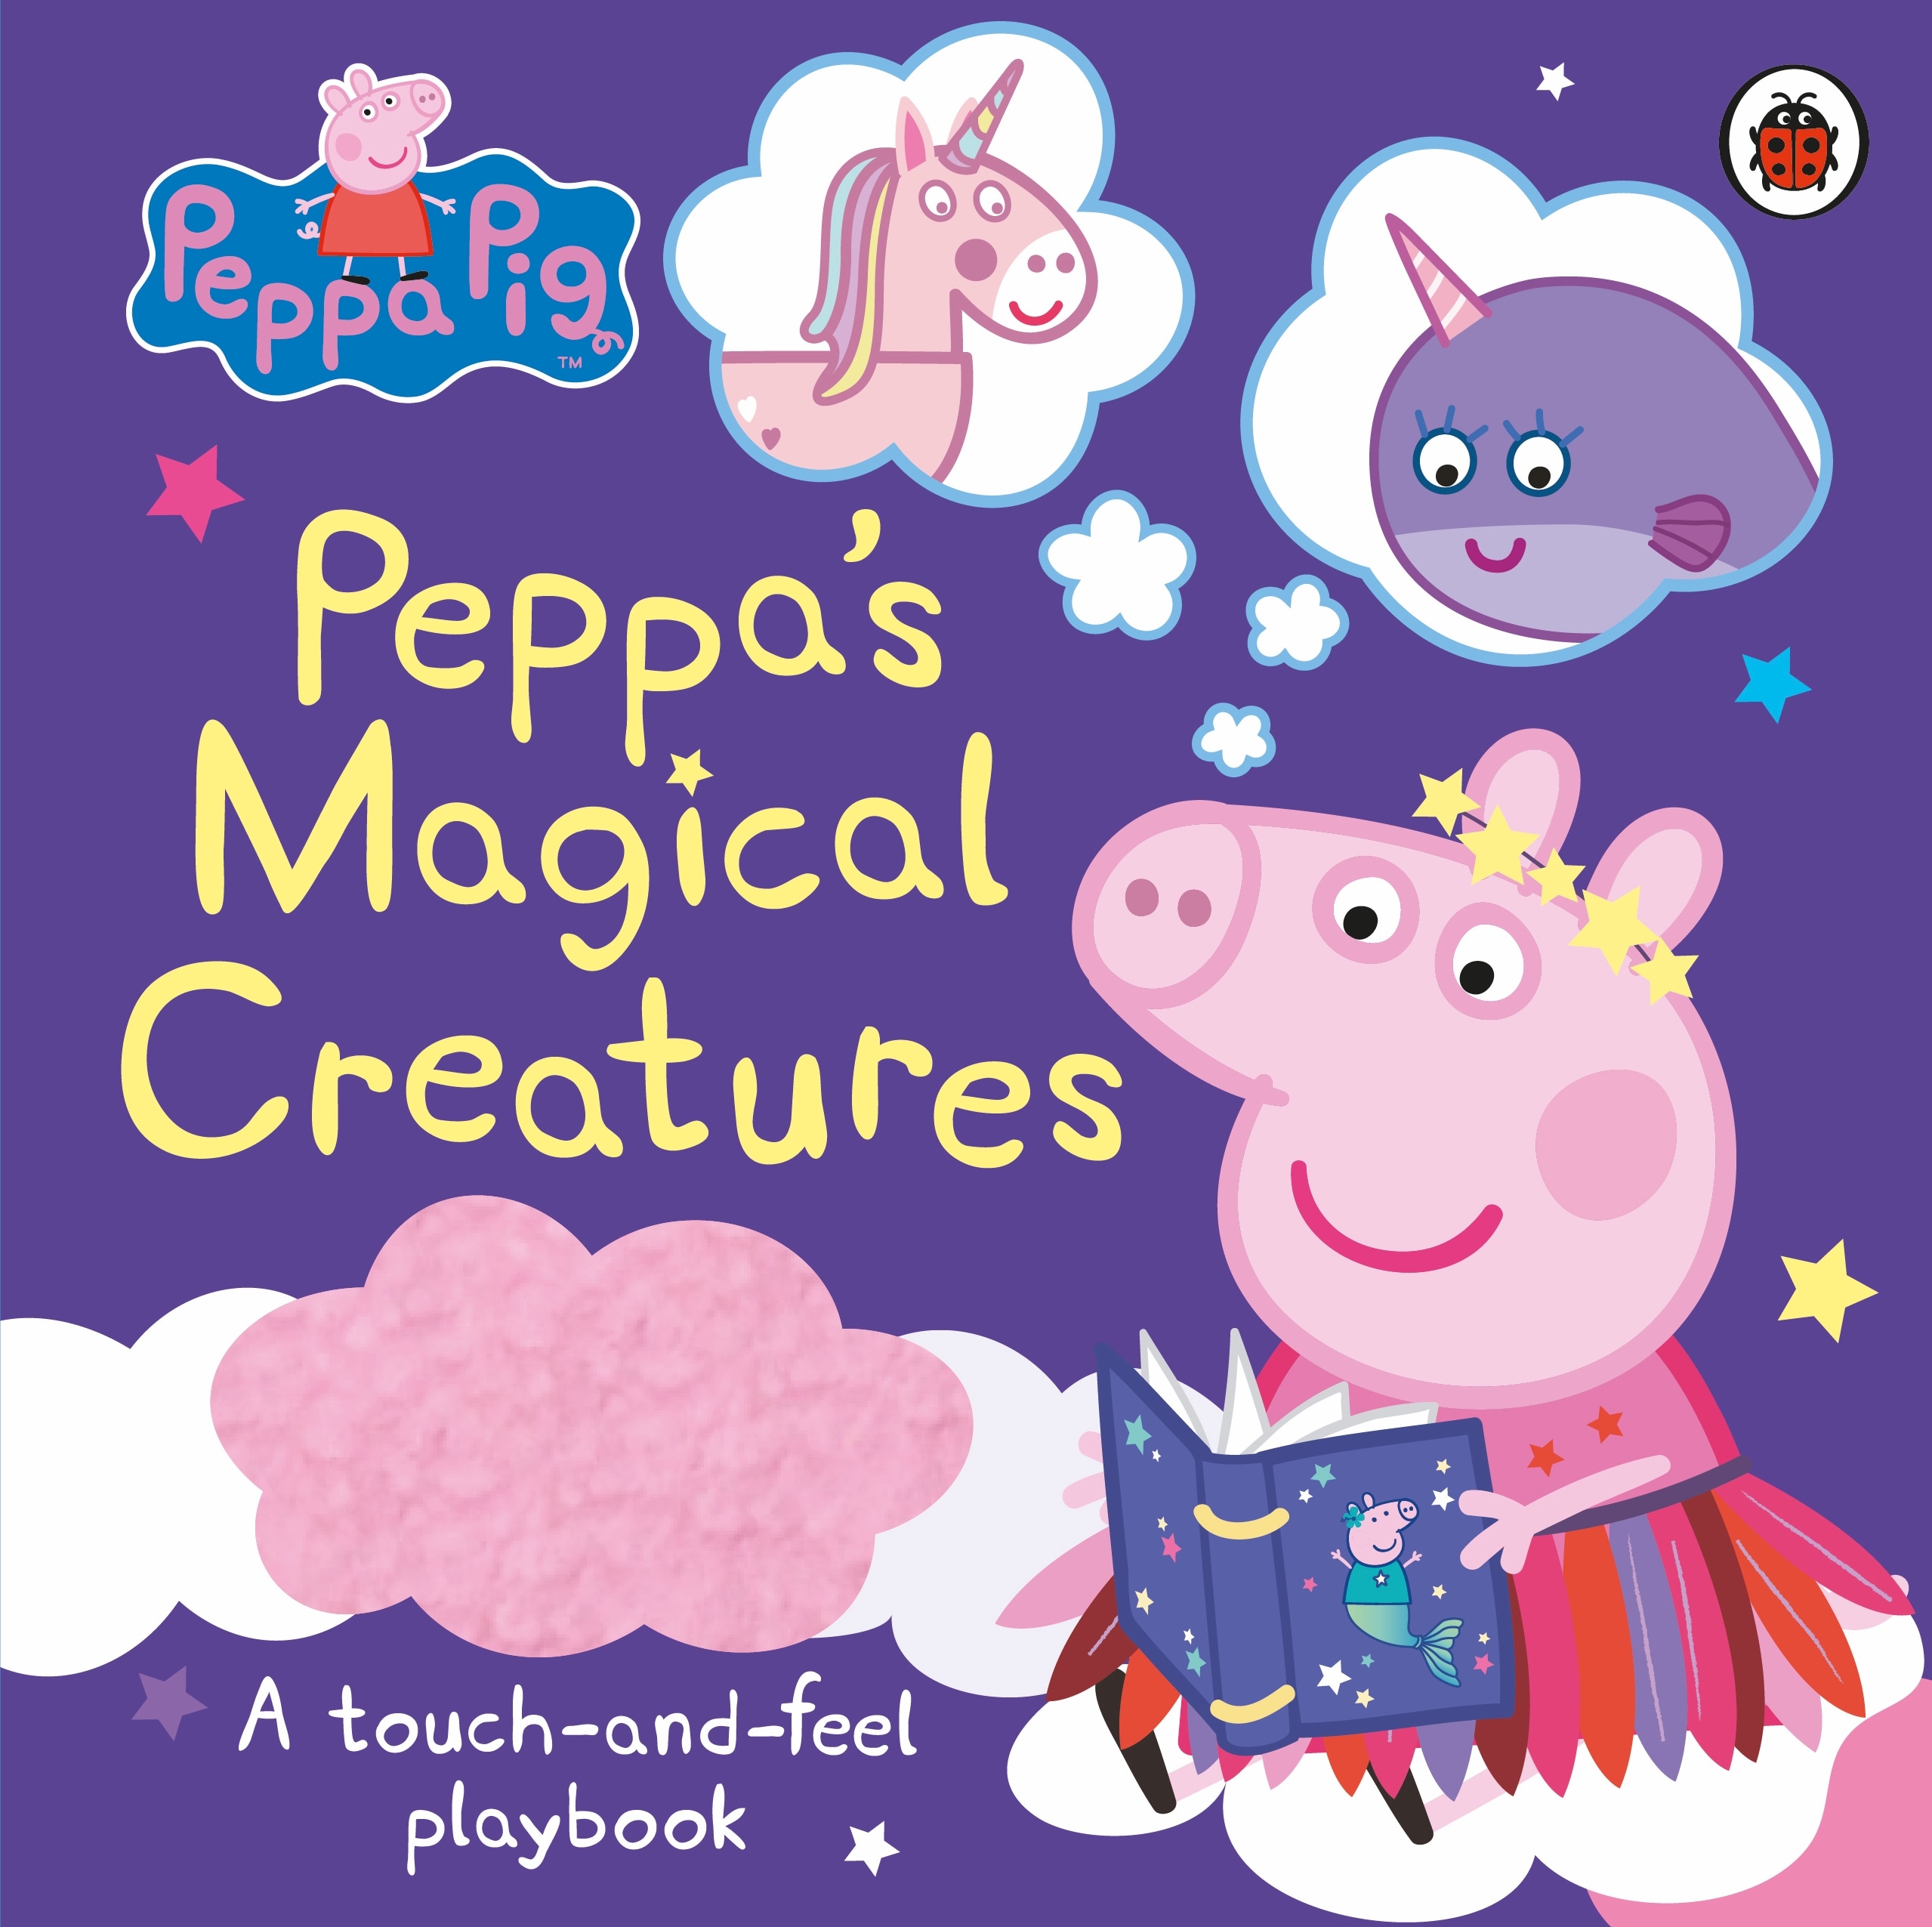 Book “Peppa Pig: Peppa's Magical Creatures” by Peppa Pig — April 29, 2021